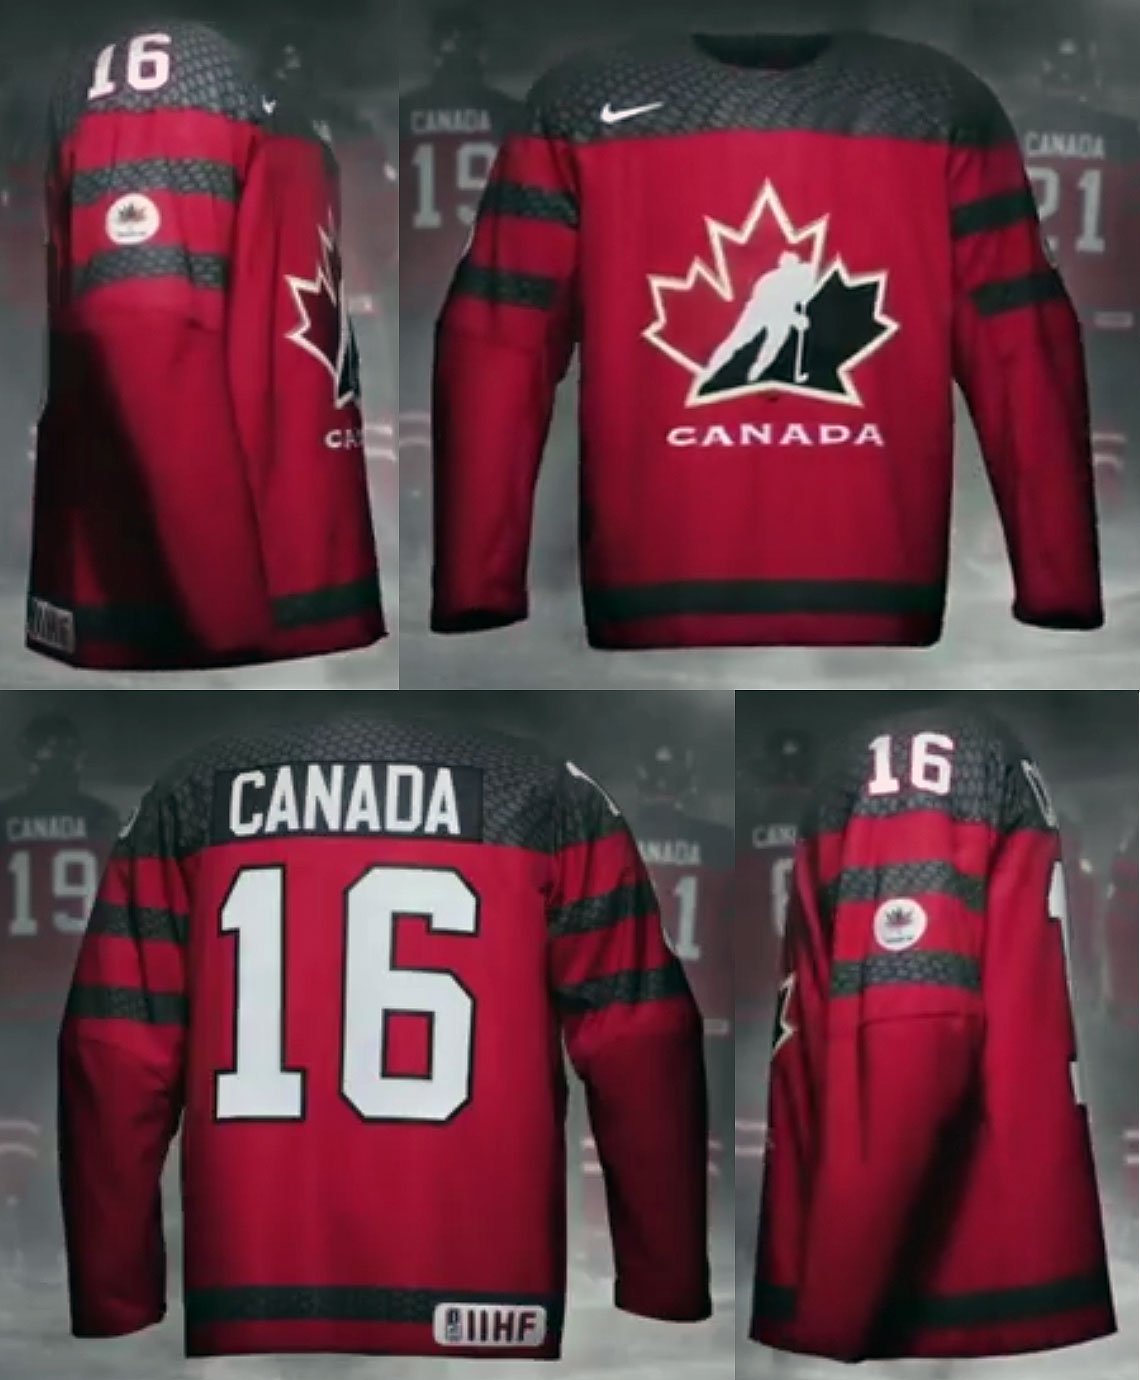 Hockey Canada unveils new Team Canada jerseys